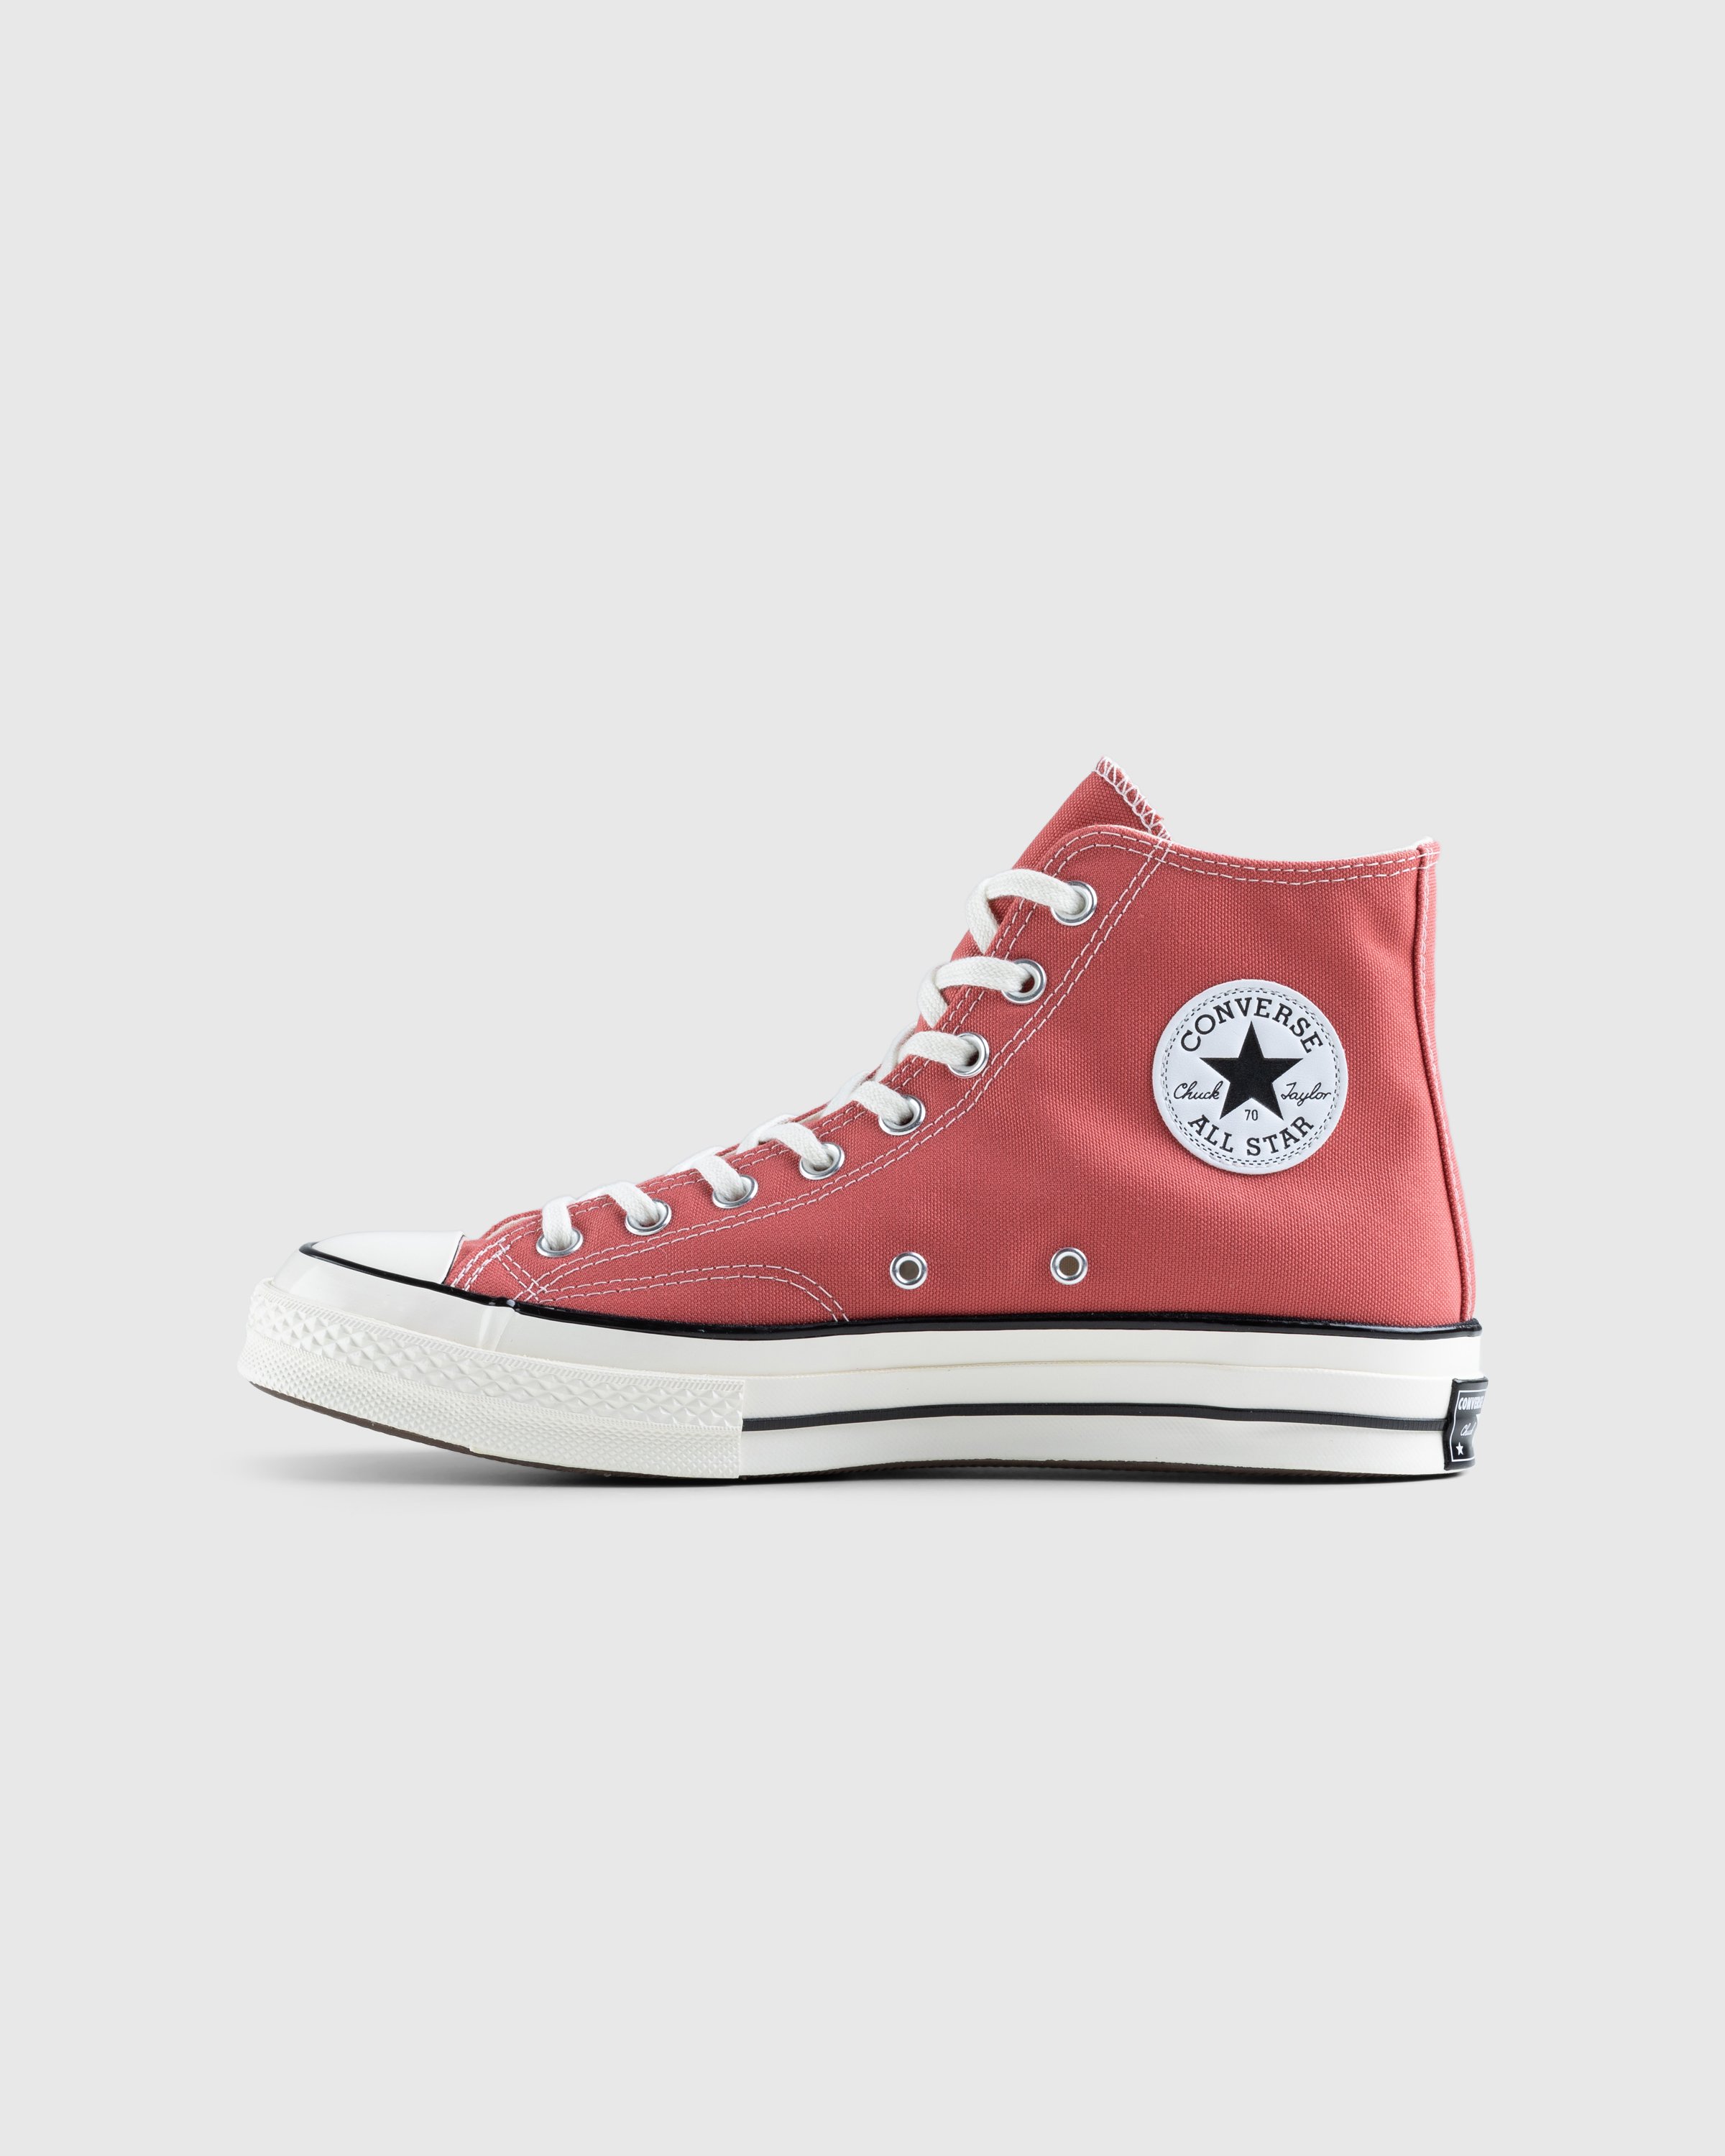 Converse - Chuck 70 HI Rhubarb Pie/Egret/Black - Footwear - Red - Image 2